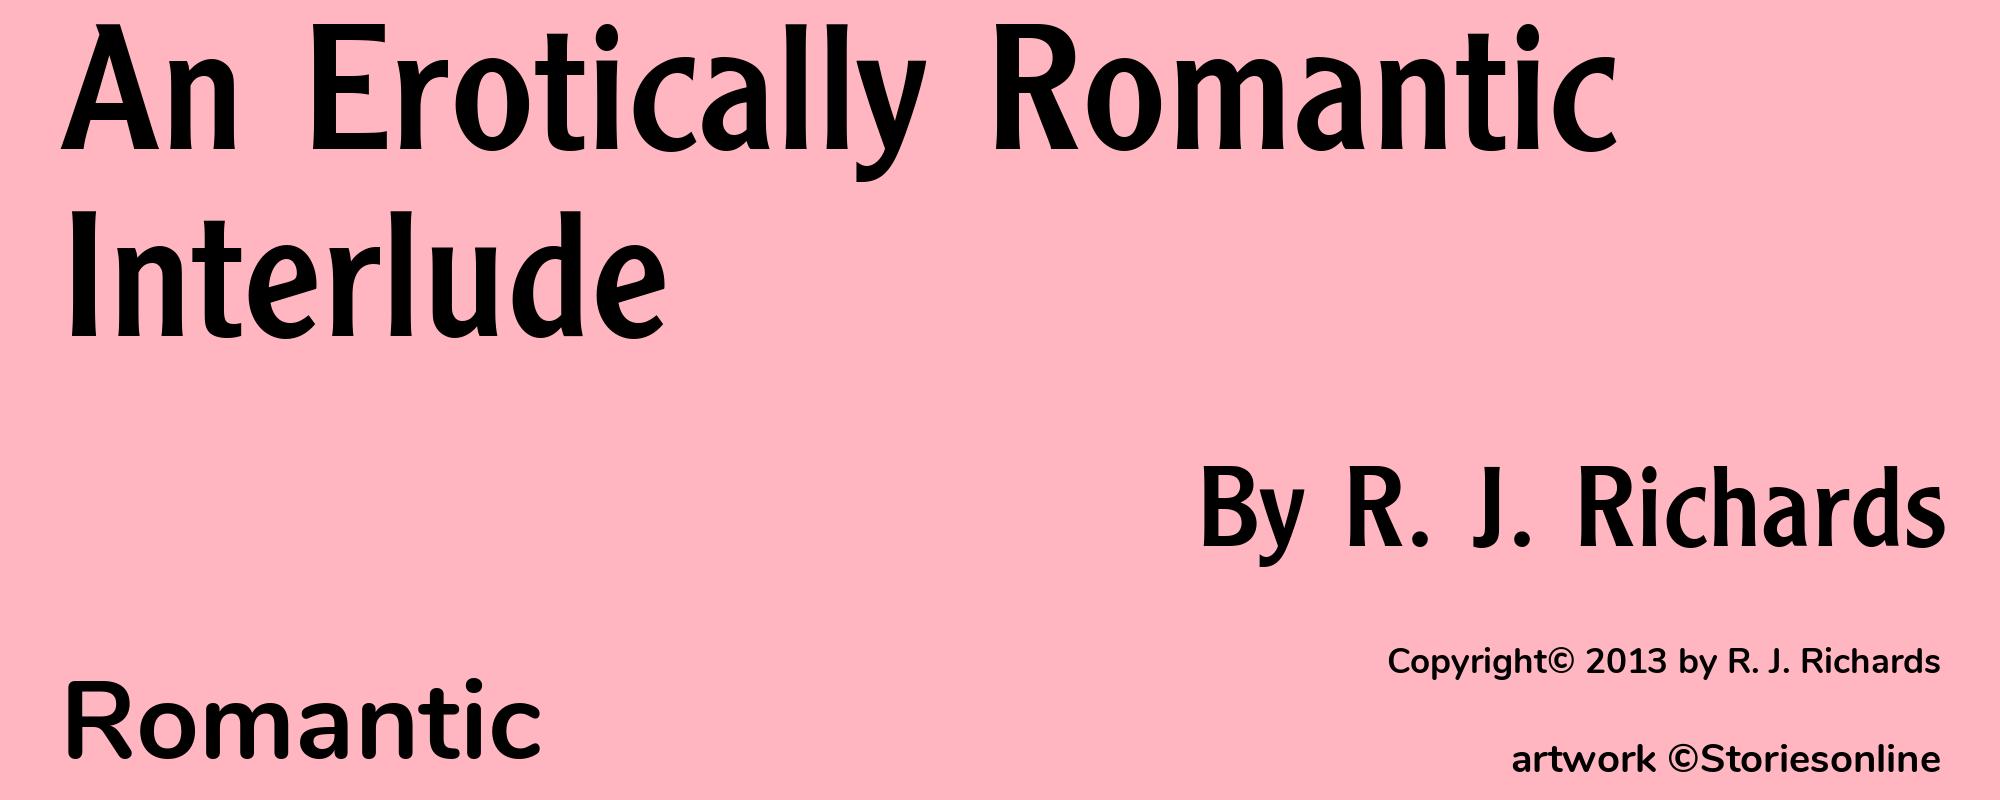 An Erotically Romantic Interlude - Cover